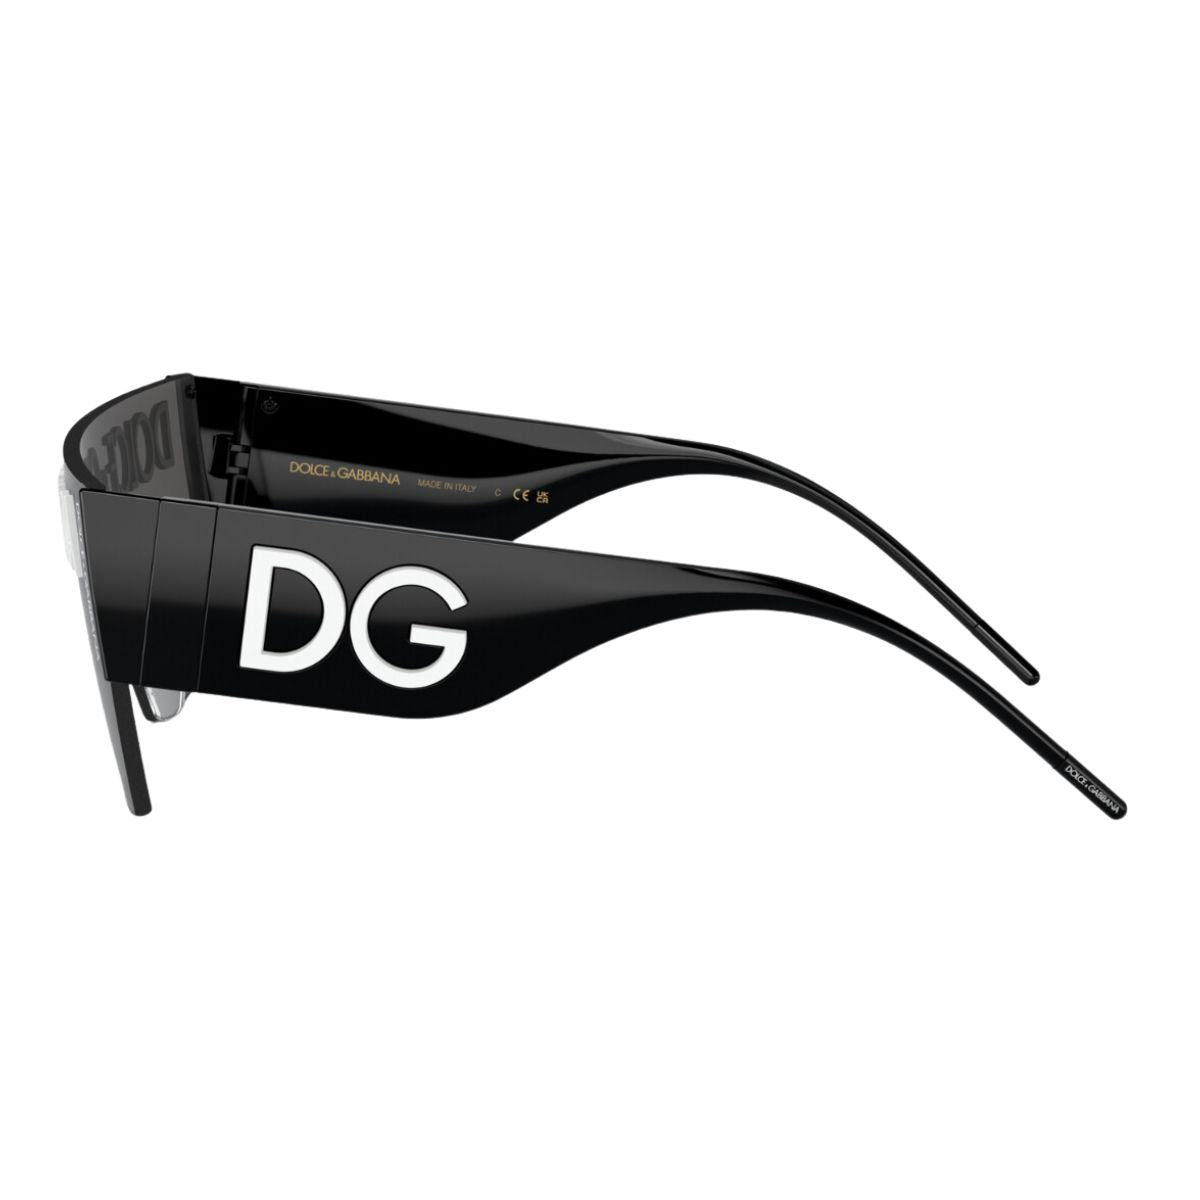 "dolce & gabban 2233 01/87 uv protection sunglasses for men & women at optorium"